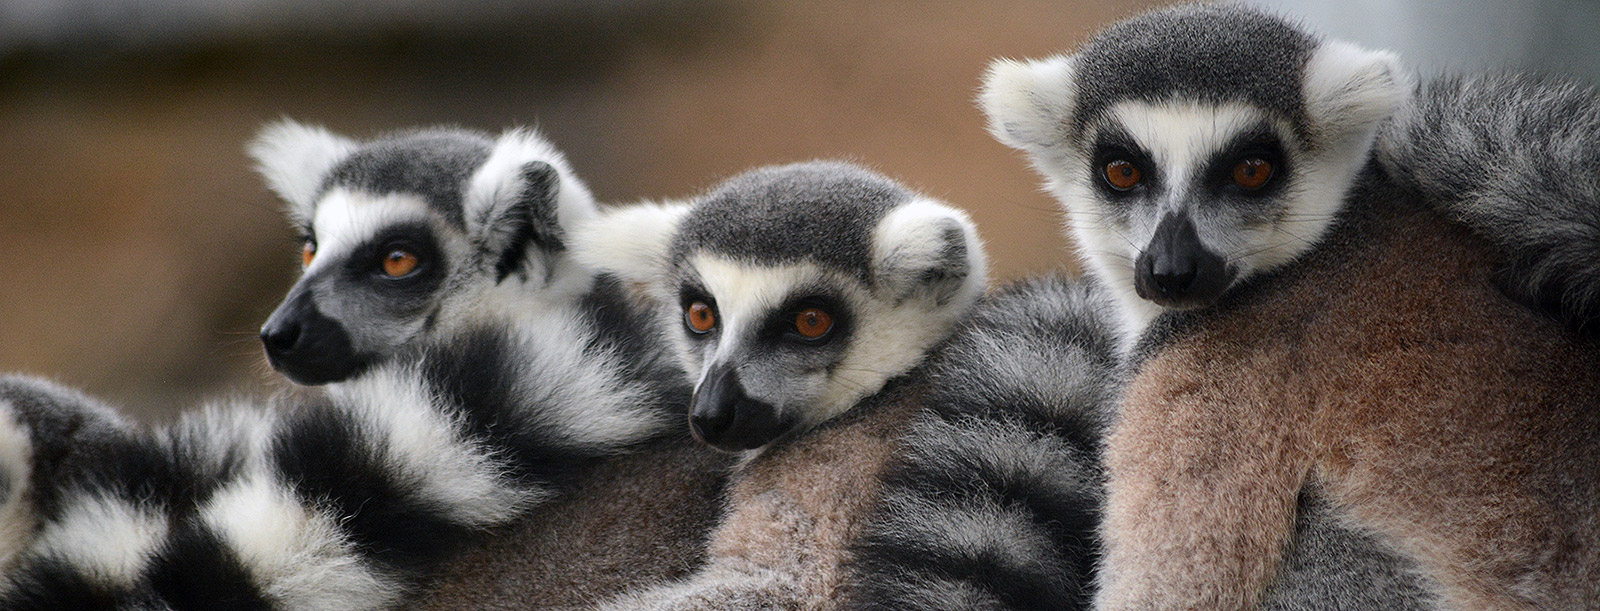 Ring-tailed Lemur - an Endangered Species in 2021 - Bagheera Endangered Species Education Resource - photo by Endangered Species Journalist Craig Kasnoff